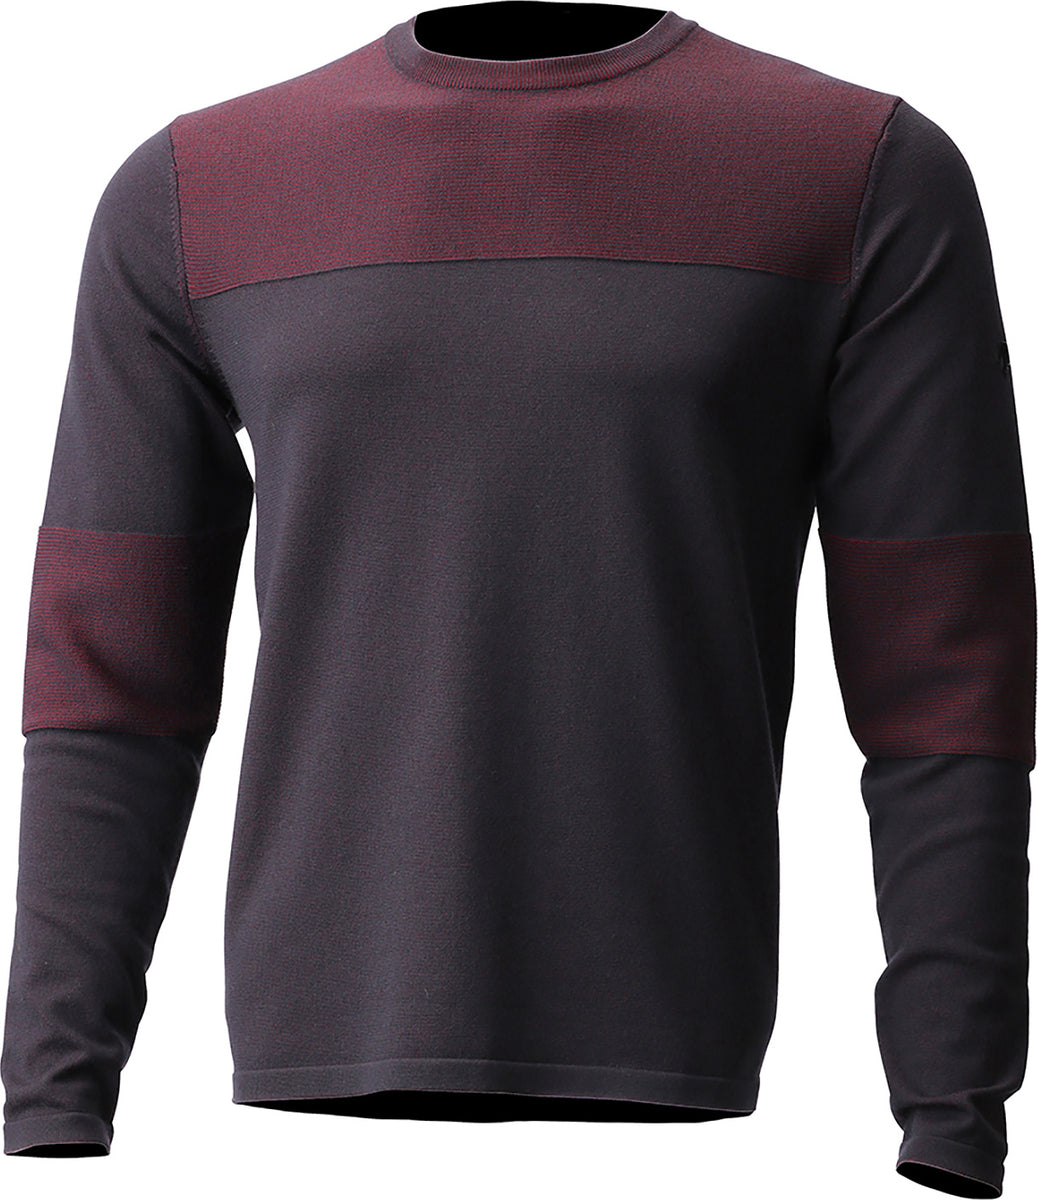 Descente Greyson Sweater - Men's | Altitude Sports